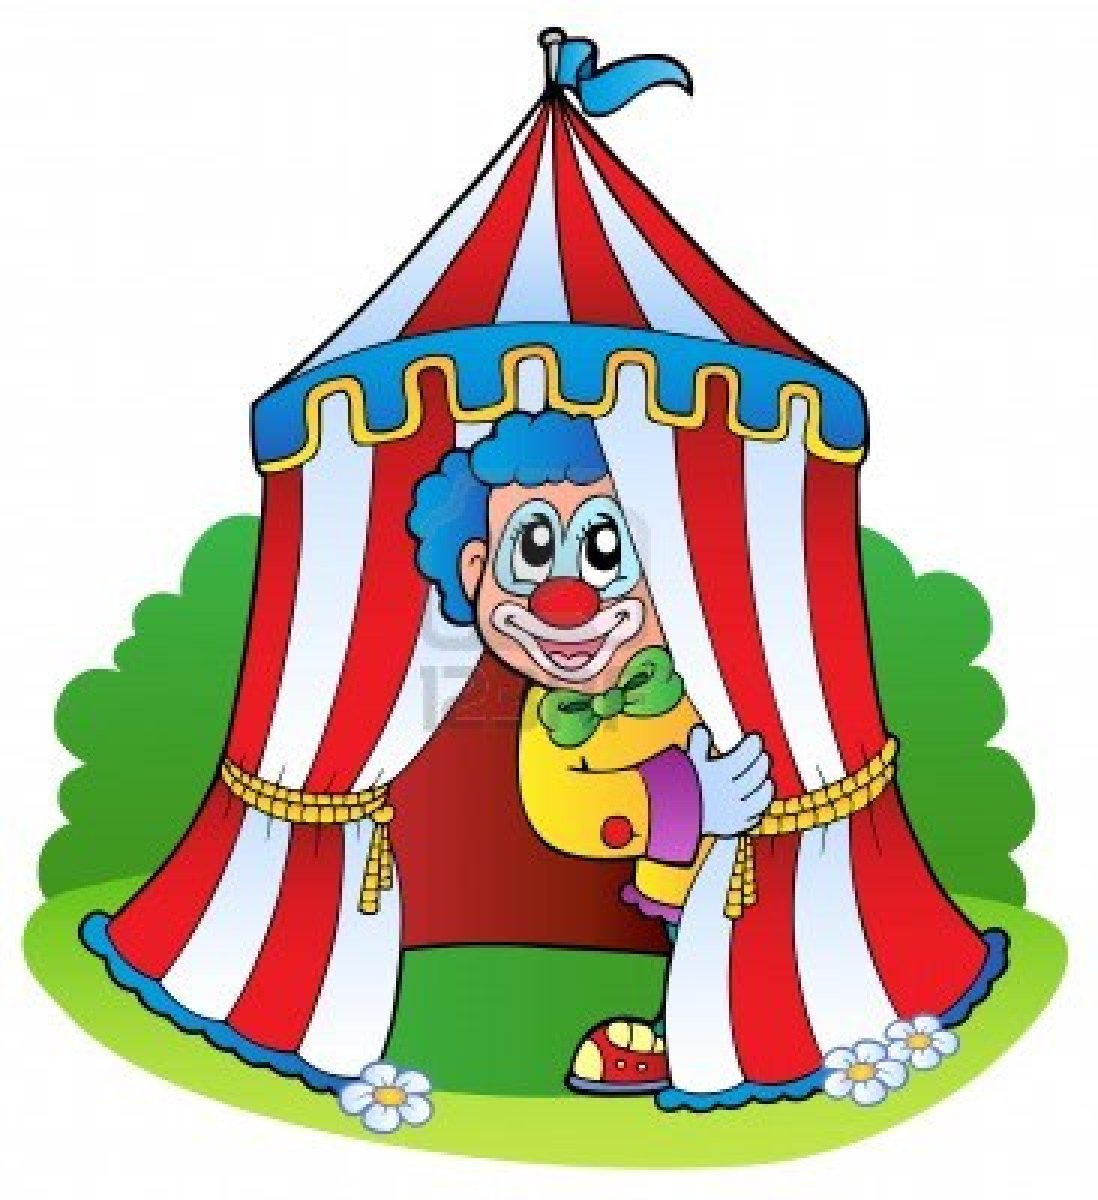 11654751-cartoon-clown-tente-de-cirque--illustration-vectorielle